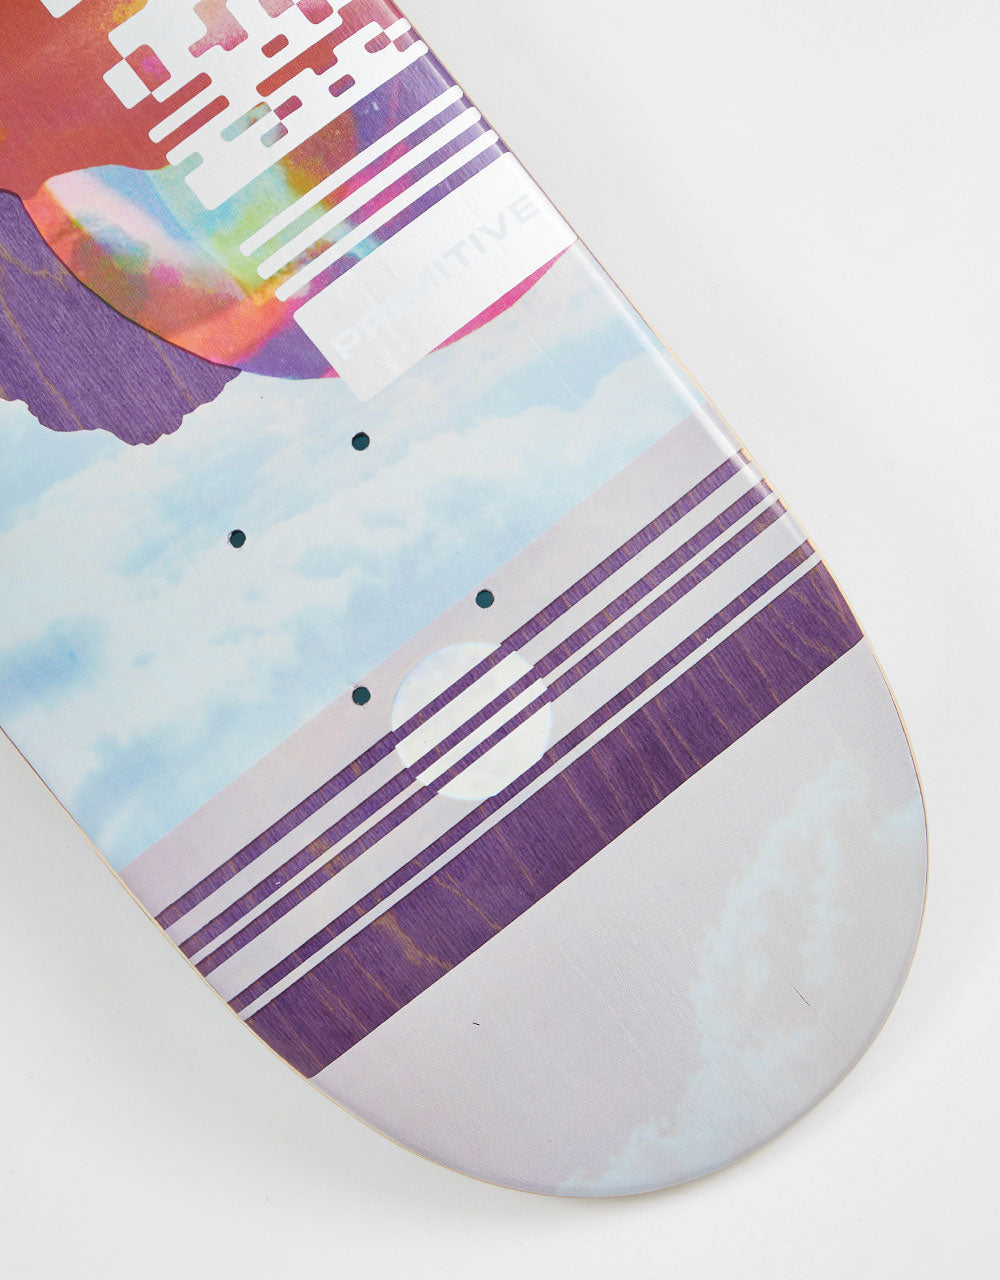 Primitive Rodriguez Eclipse Skateboard Deck - 8"